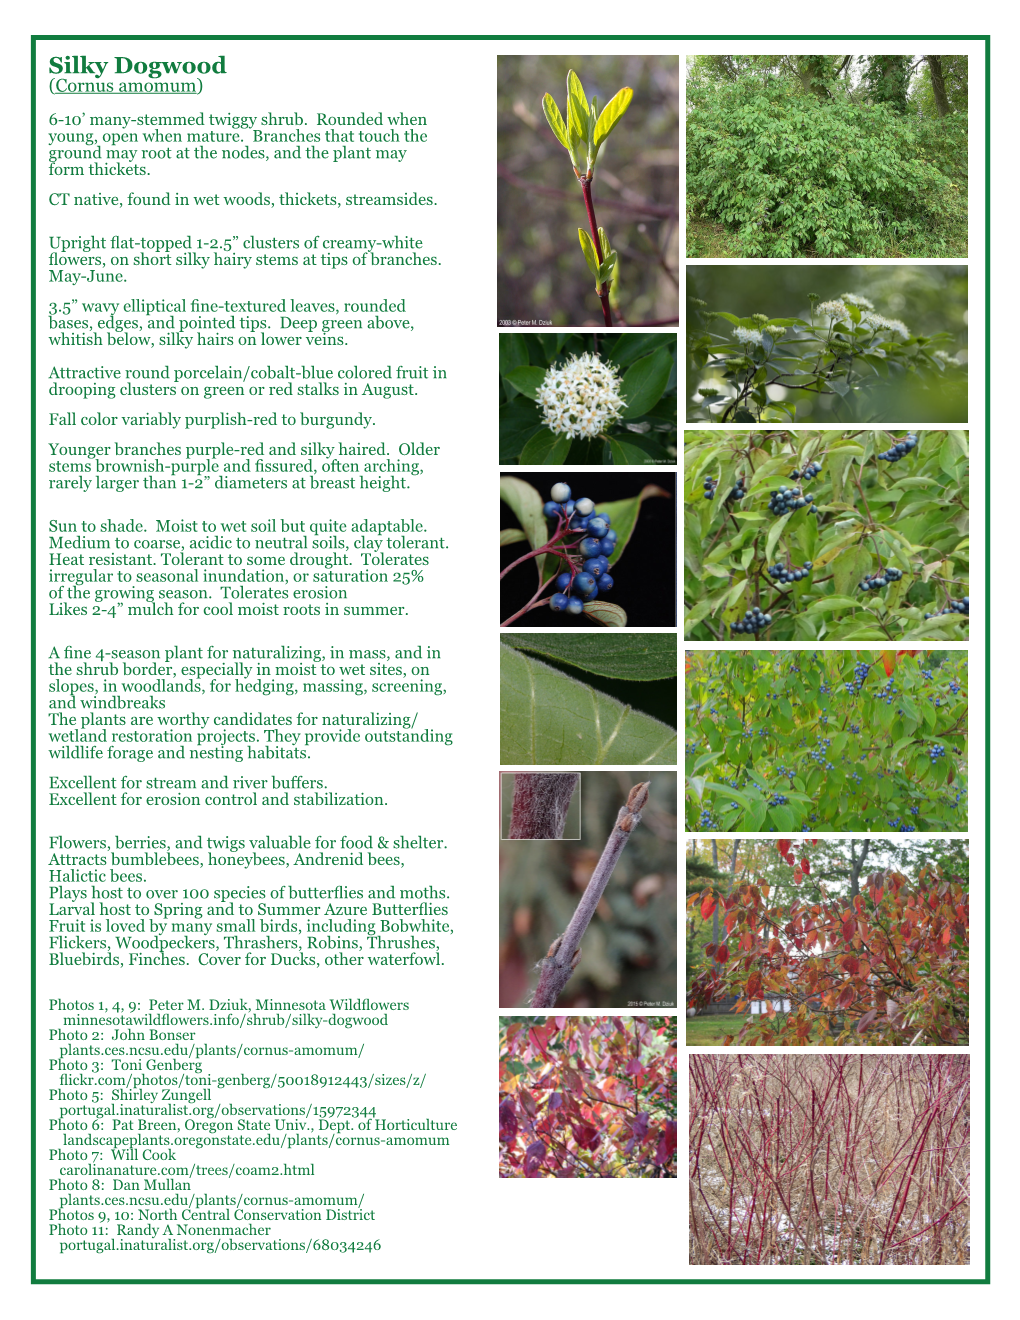 Silky Dogwood (Cornus Amomum) 6-10’ Many-Stemmed Twiggy Shrub